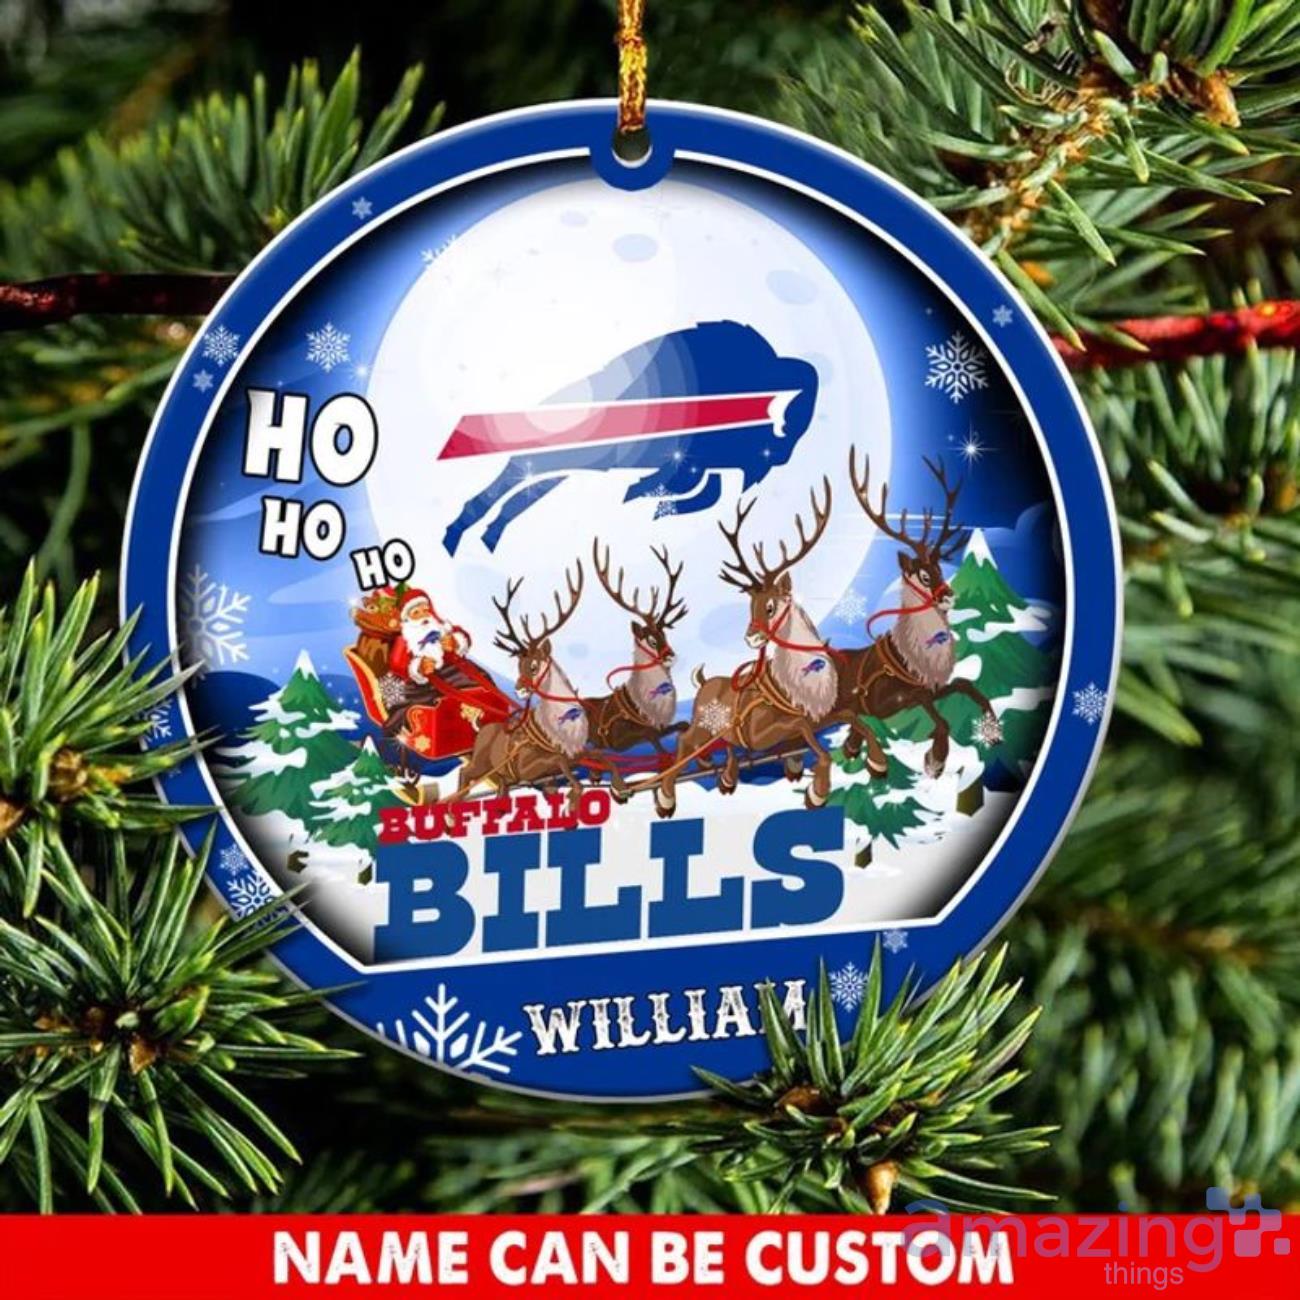 Buffalo Bills 3D Logo Series Ornament 